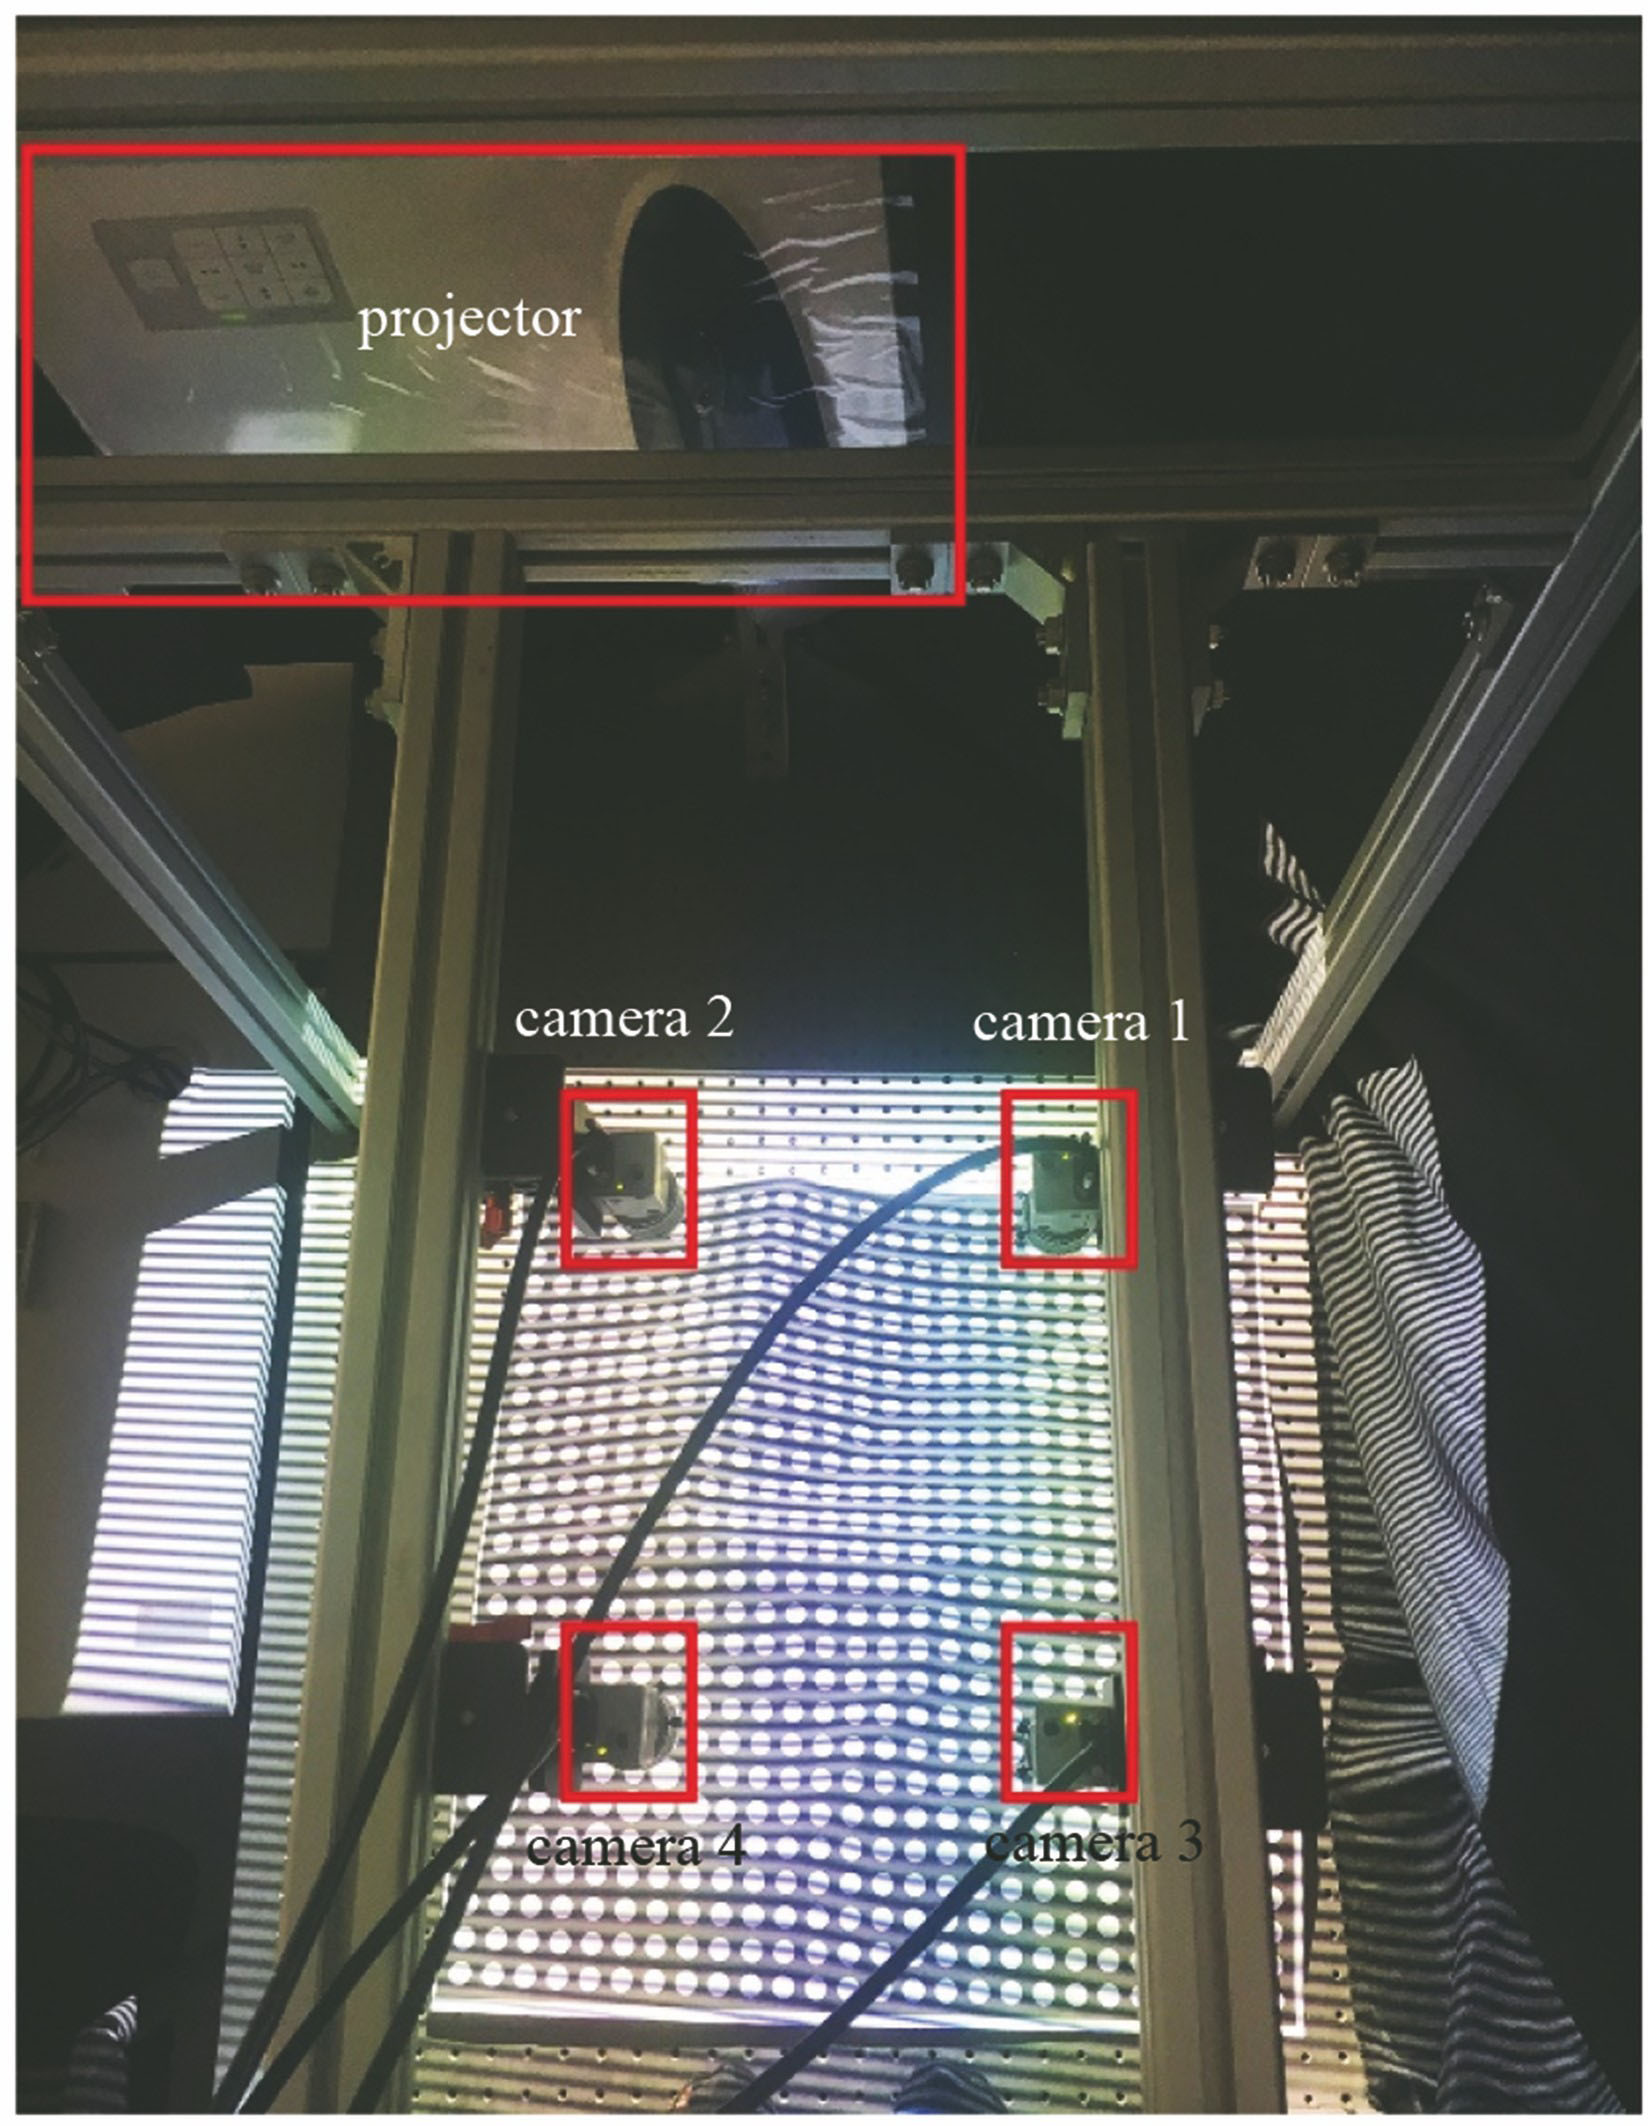 Experimental setup for multi-camera three-dimensional shape measuring system using digital fringe projection techniques